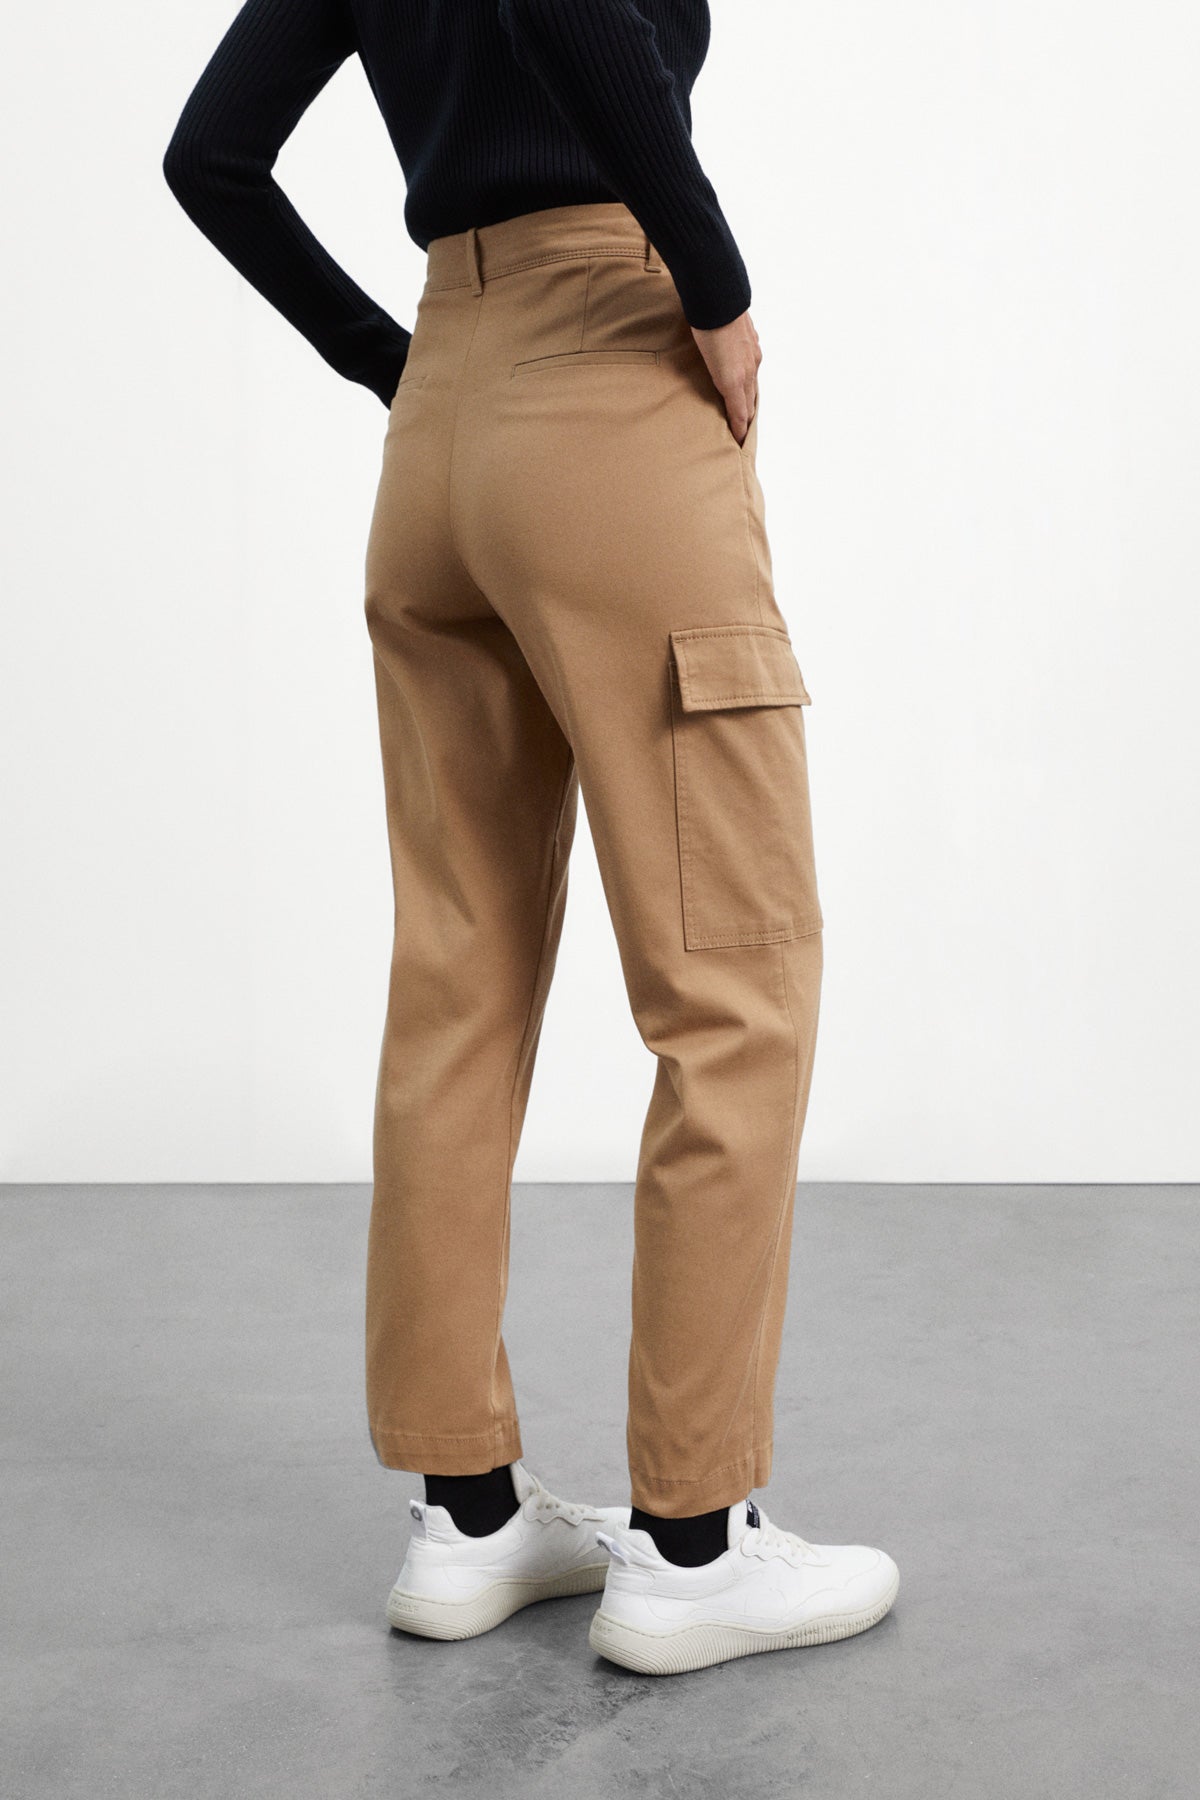 Ladies GARDEUR Plain Grey Check Trousers - Short Length - 27